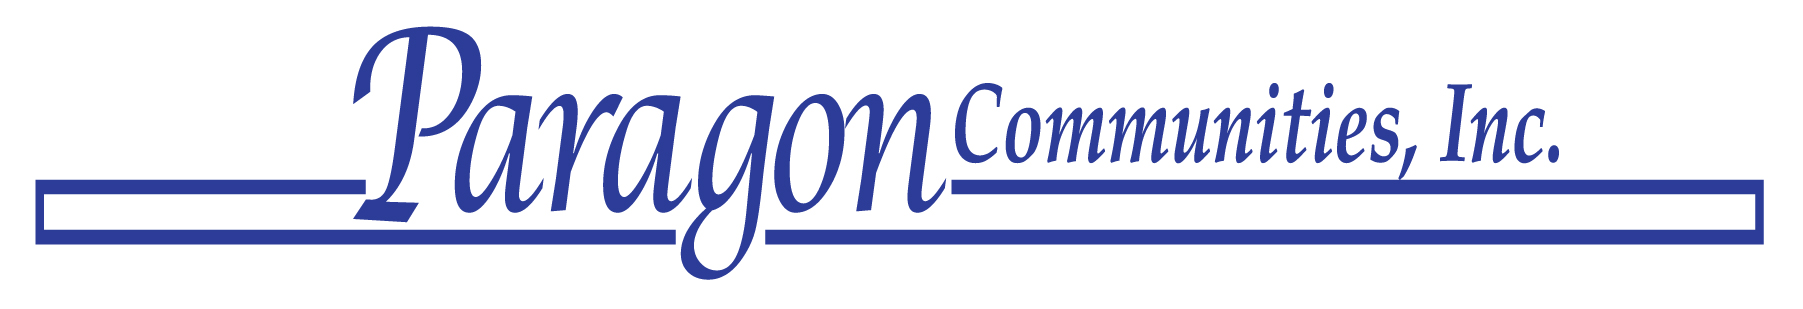 Paragon Communities, Inc. Logo